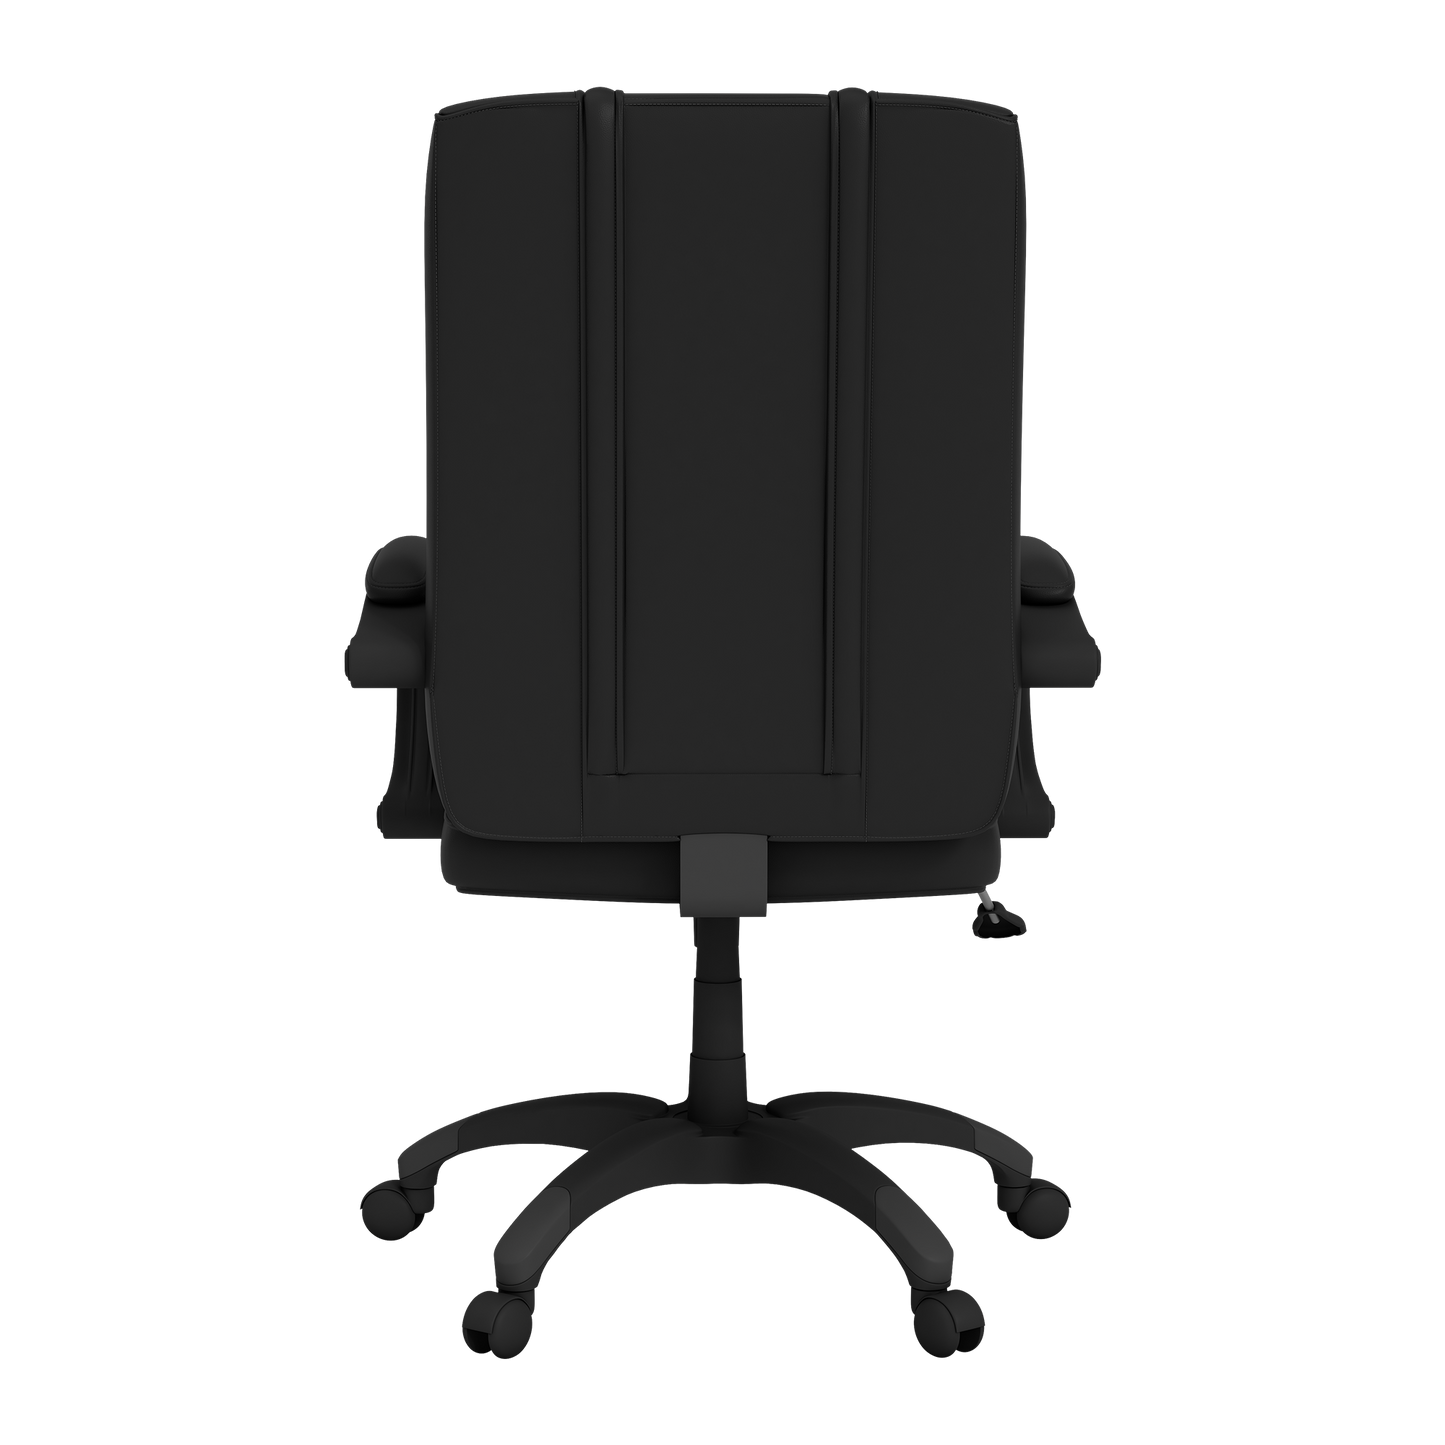 Office Chair 1000 with Sporting Kansas City Alternate Logo